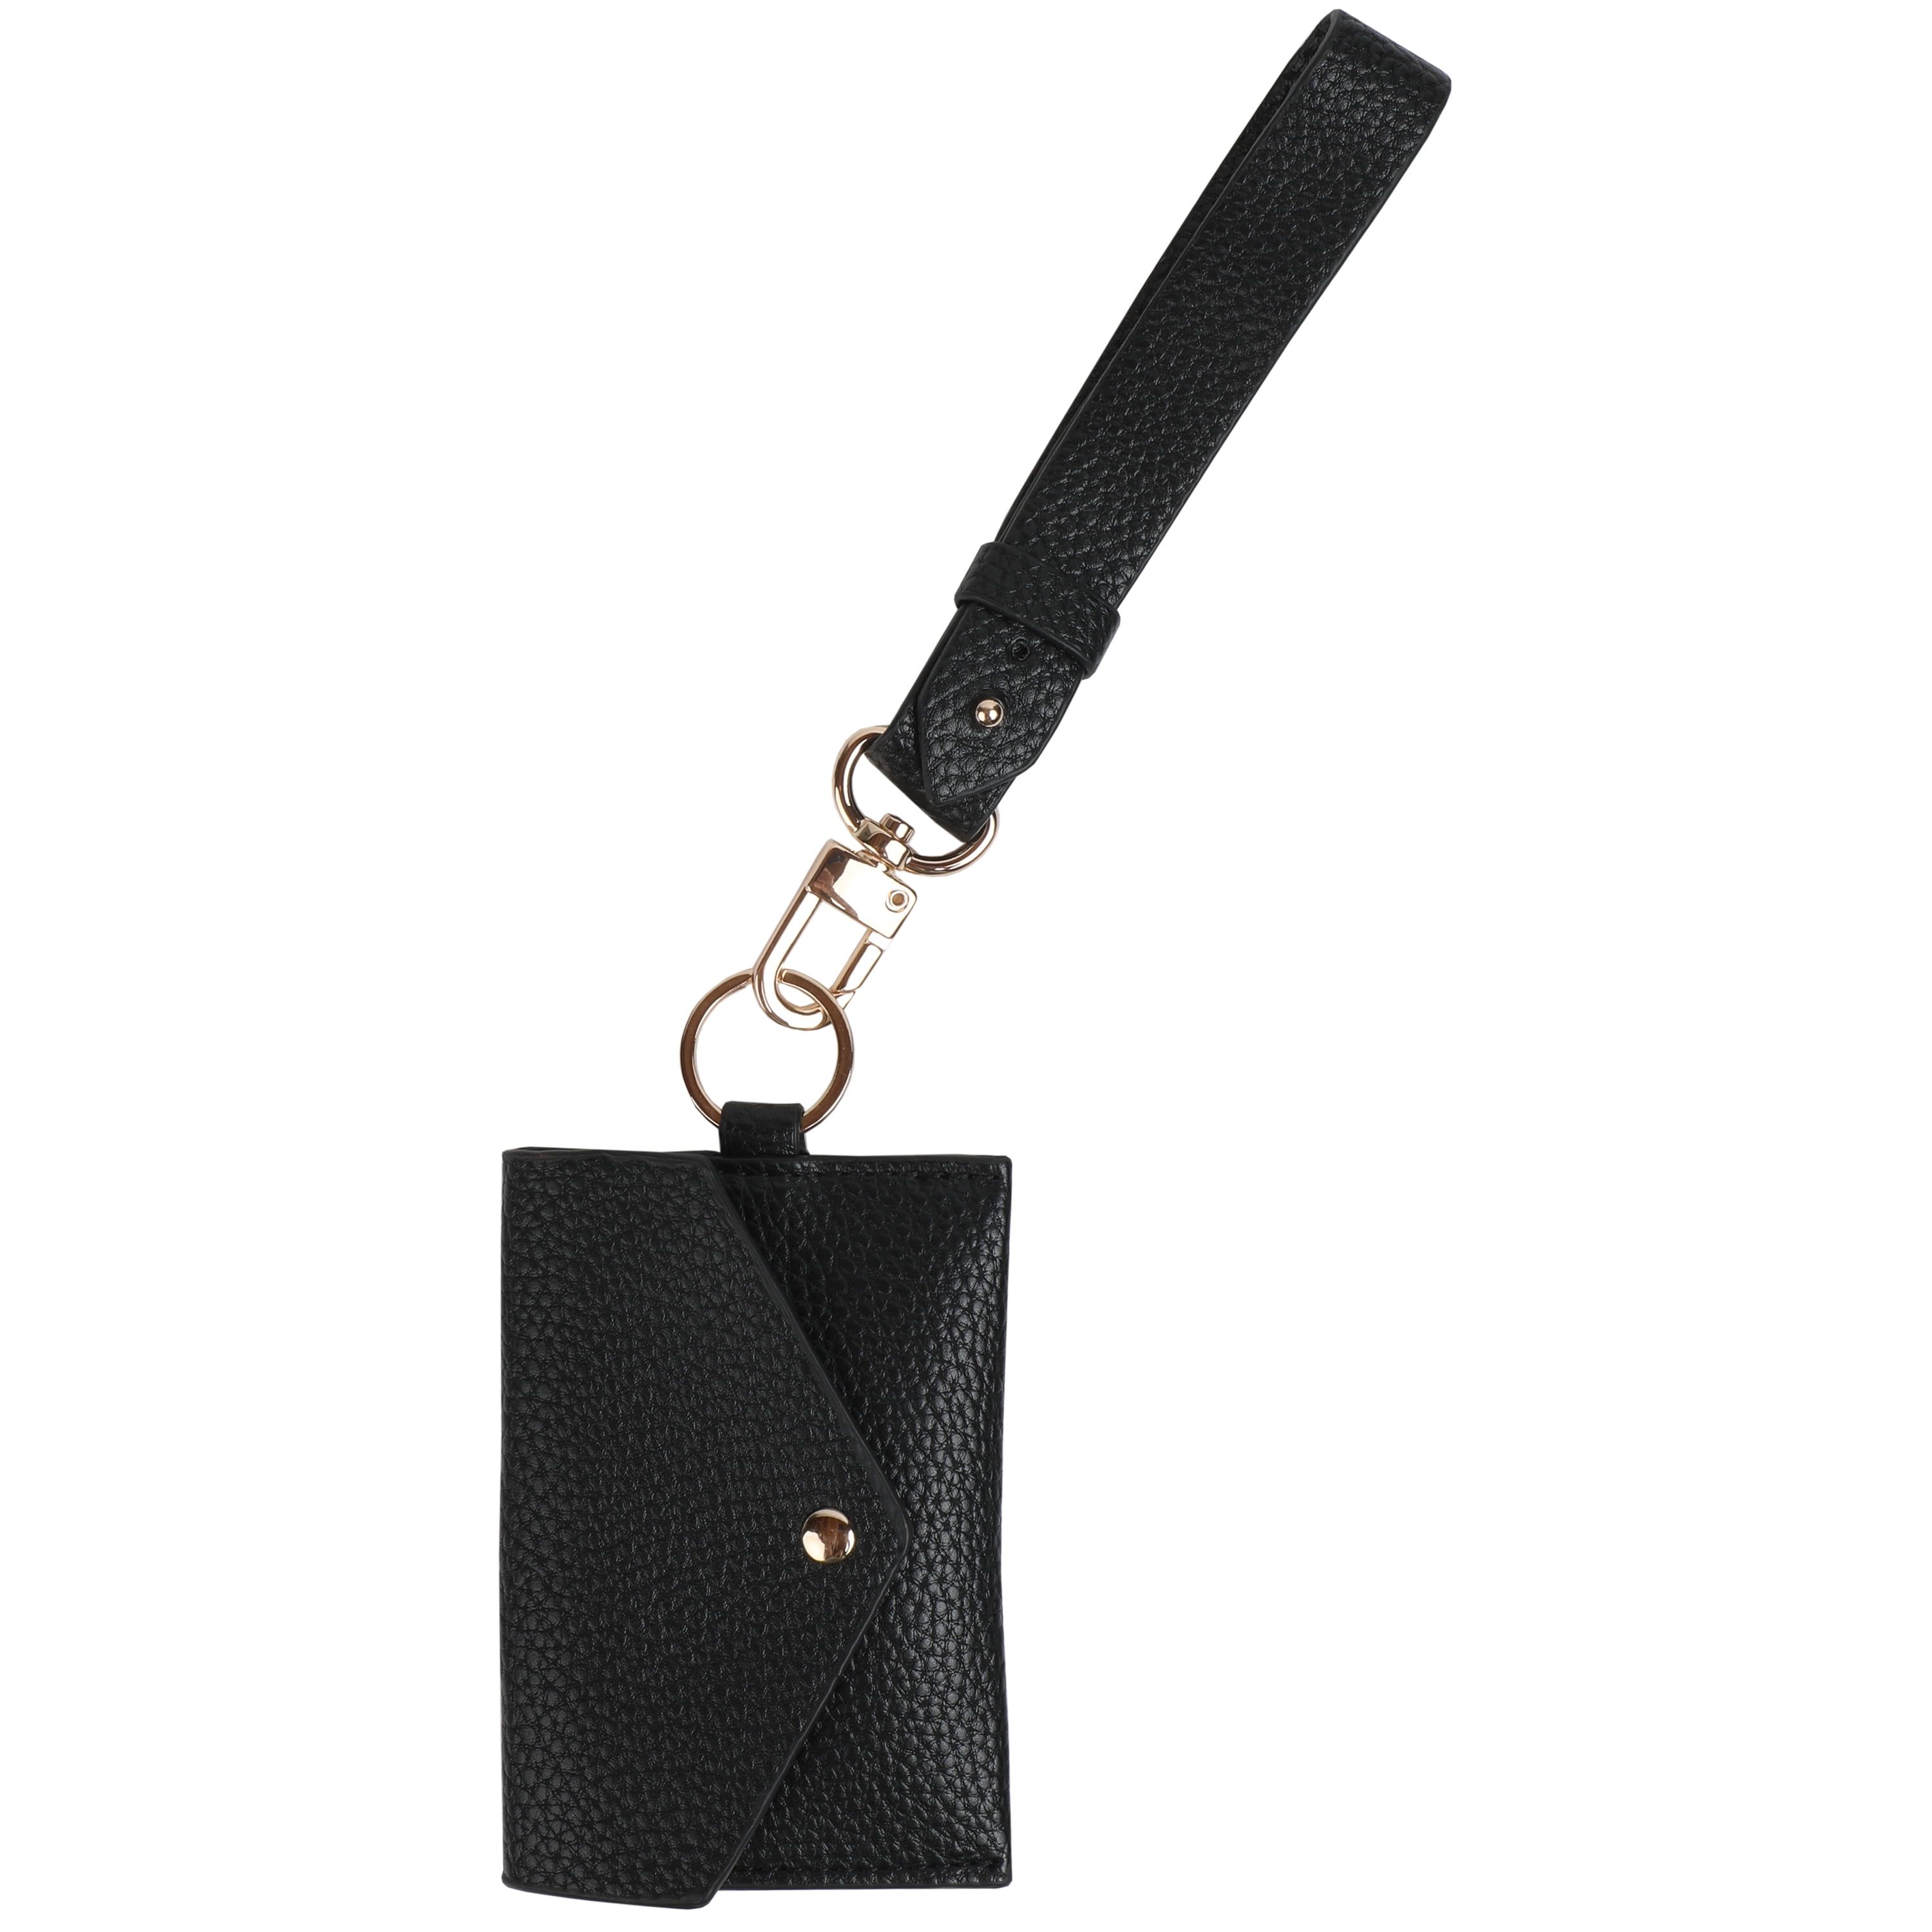 PR Essentials Brand Women's Adult Imitation Leather Wrist Lanyard with ...